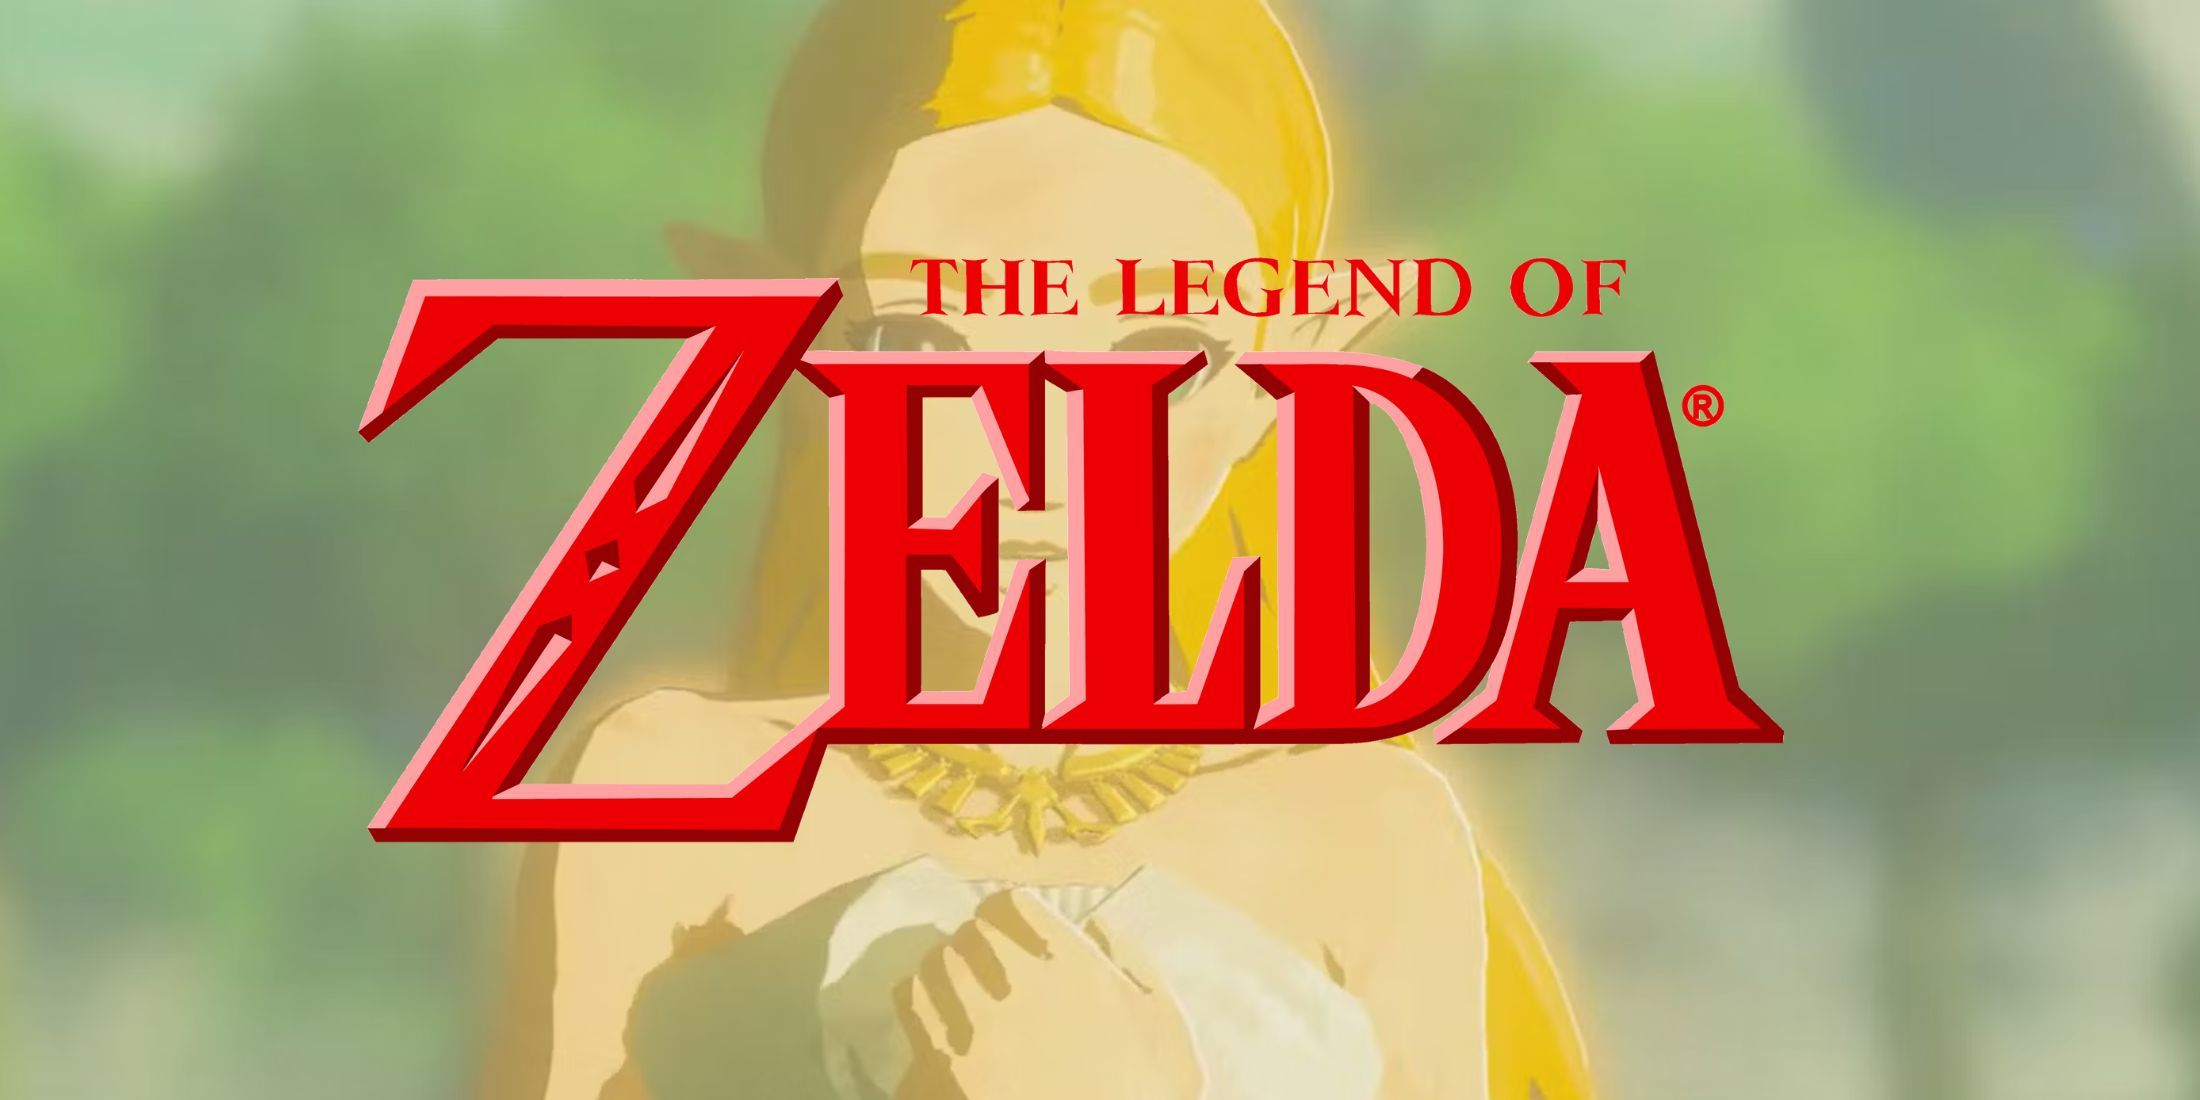 The logo for The Legend of Zelda in front of princess Zelda.